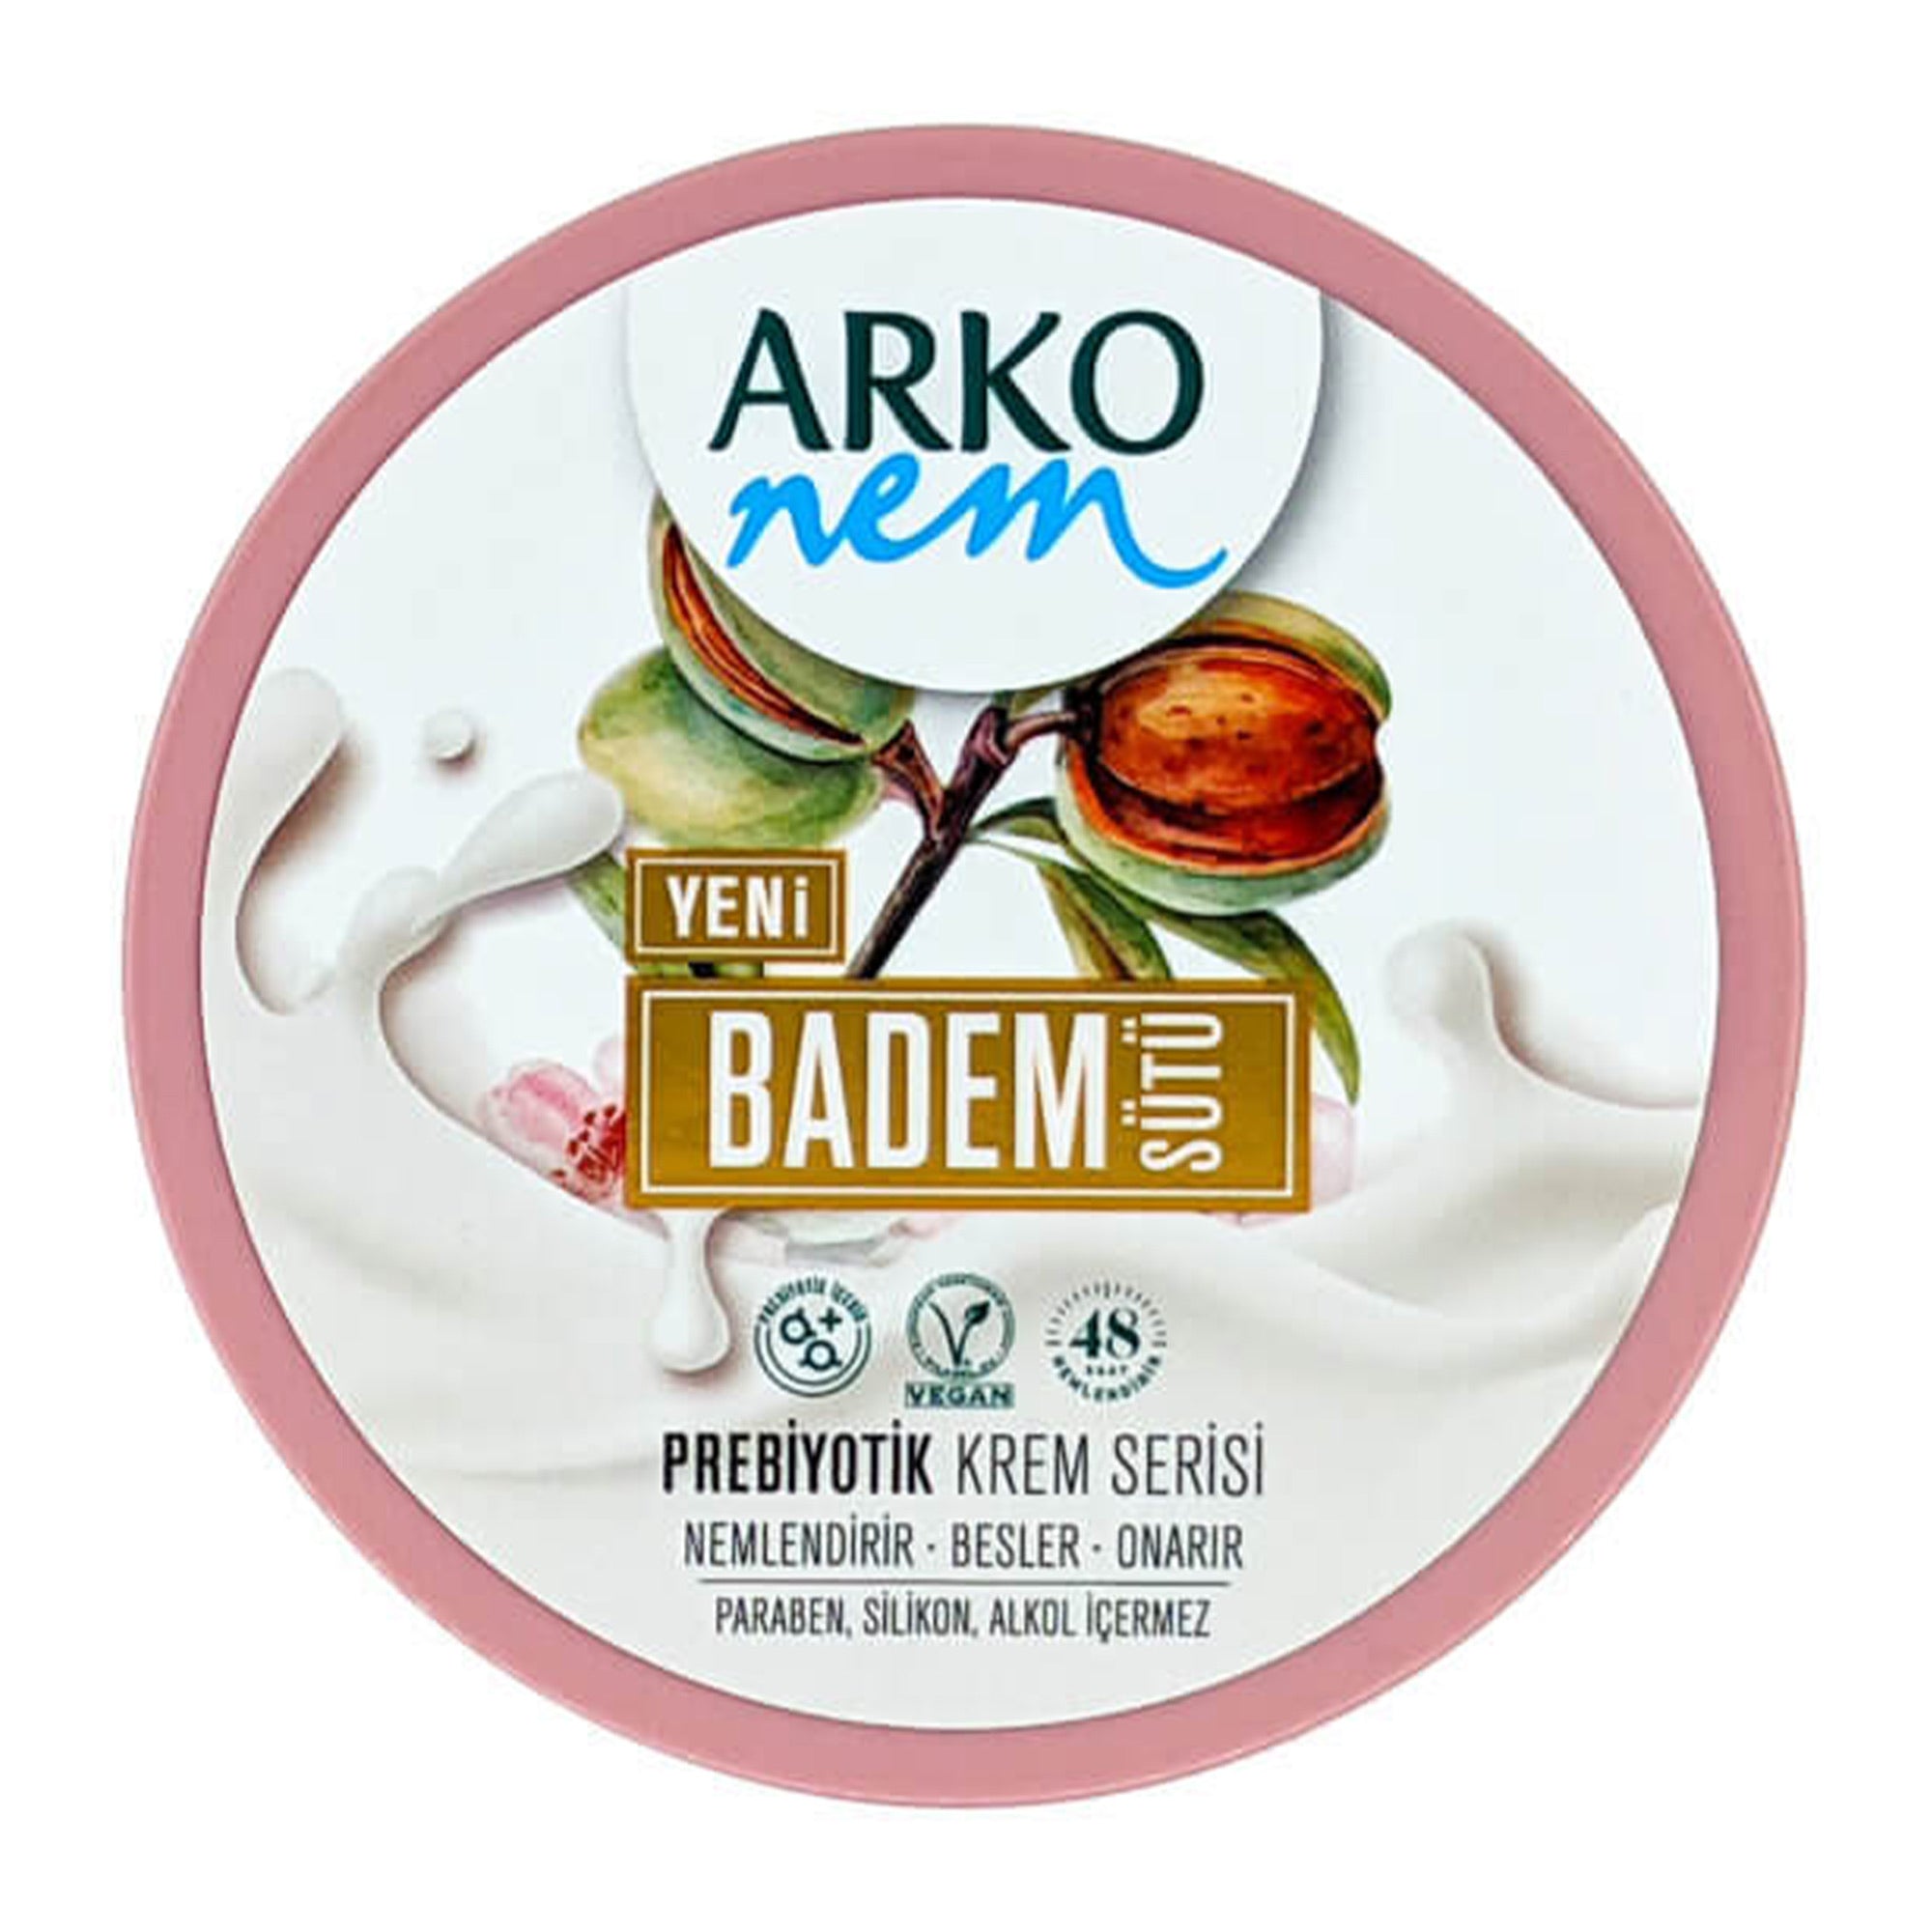 Arko - Nem Almond Milk Cream 250ml - Eson Direct